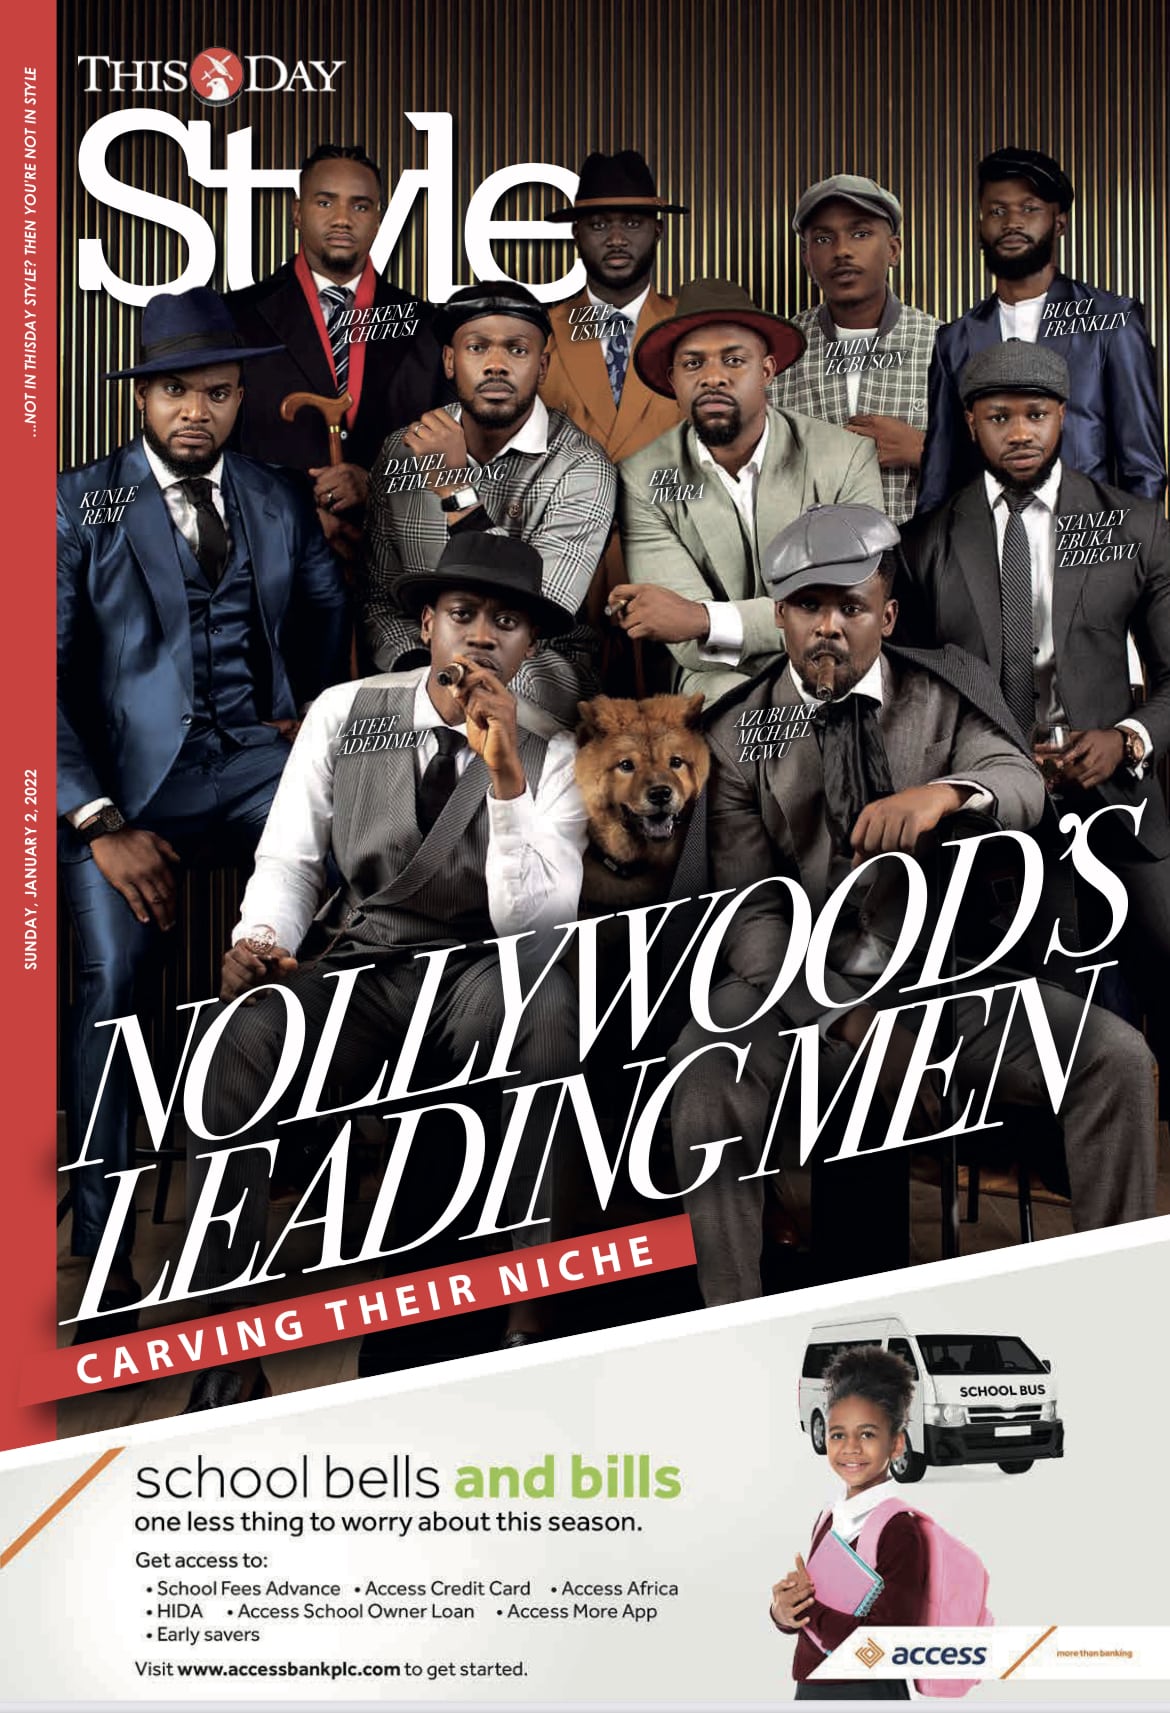 Nollywood’s Leading Men- ThisDay Style Magazine